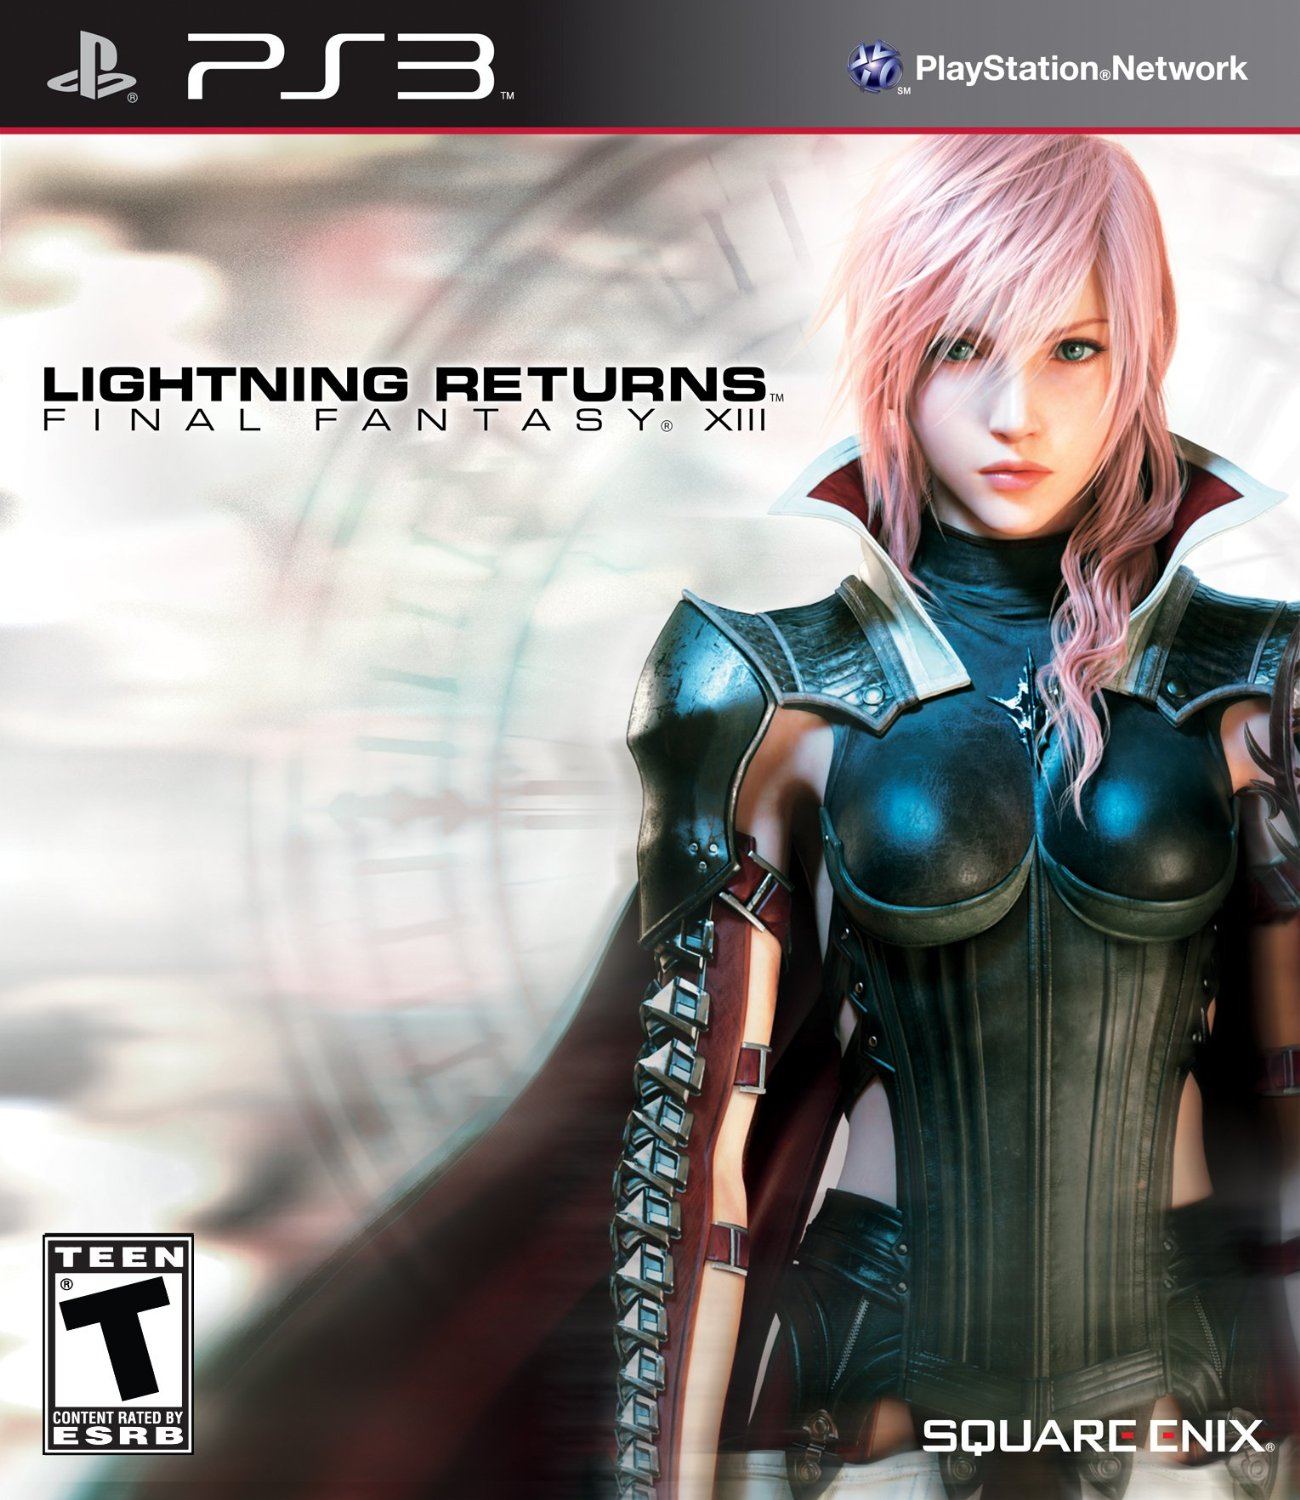 download lightning returns final fantasy xiii cheat engine